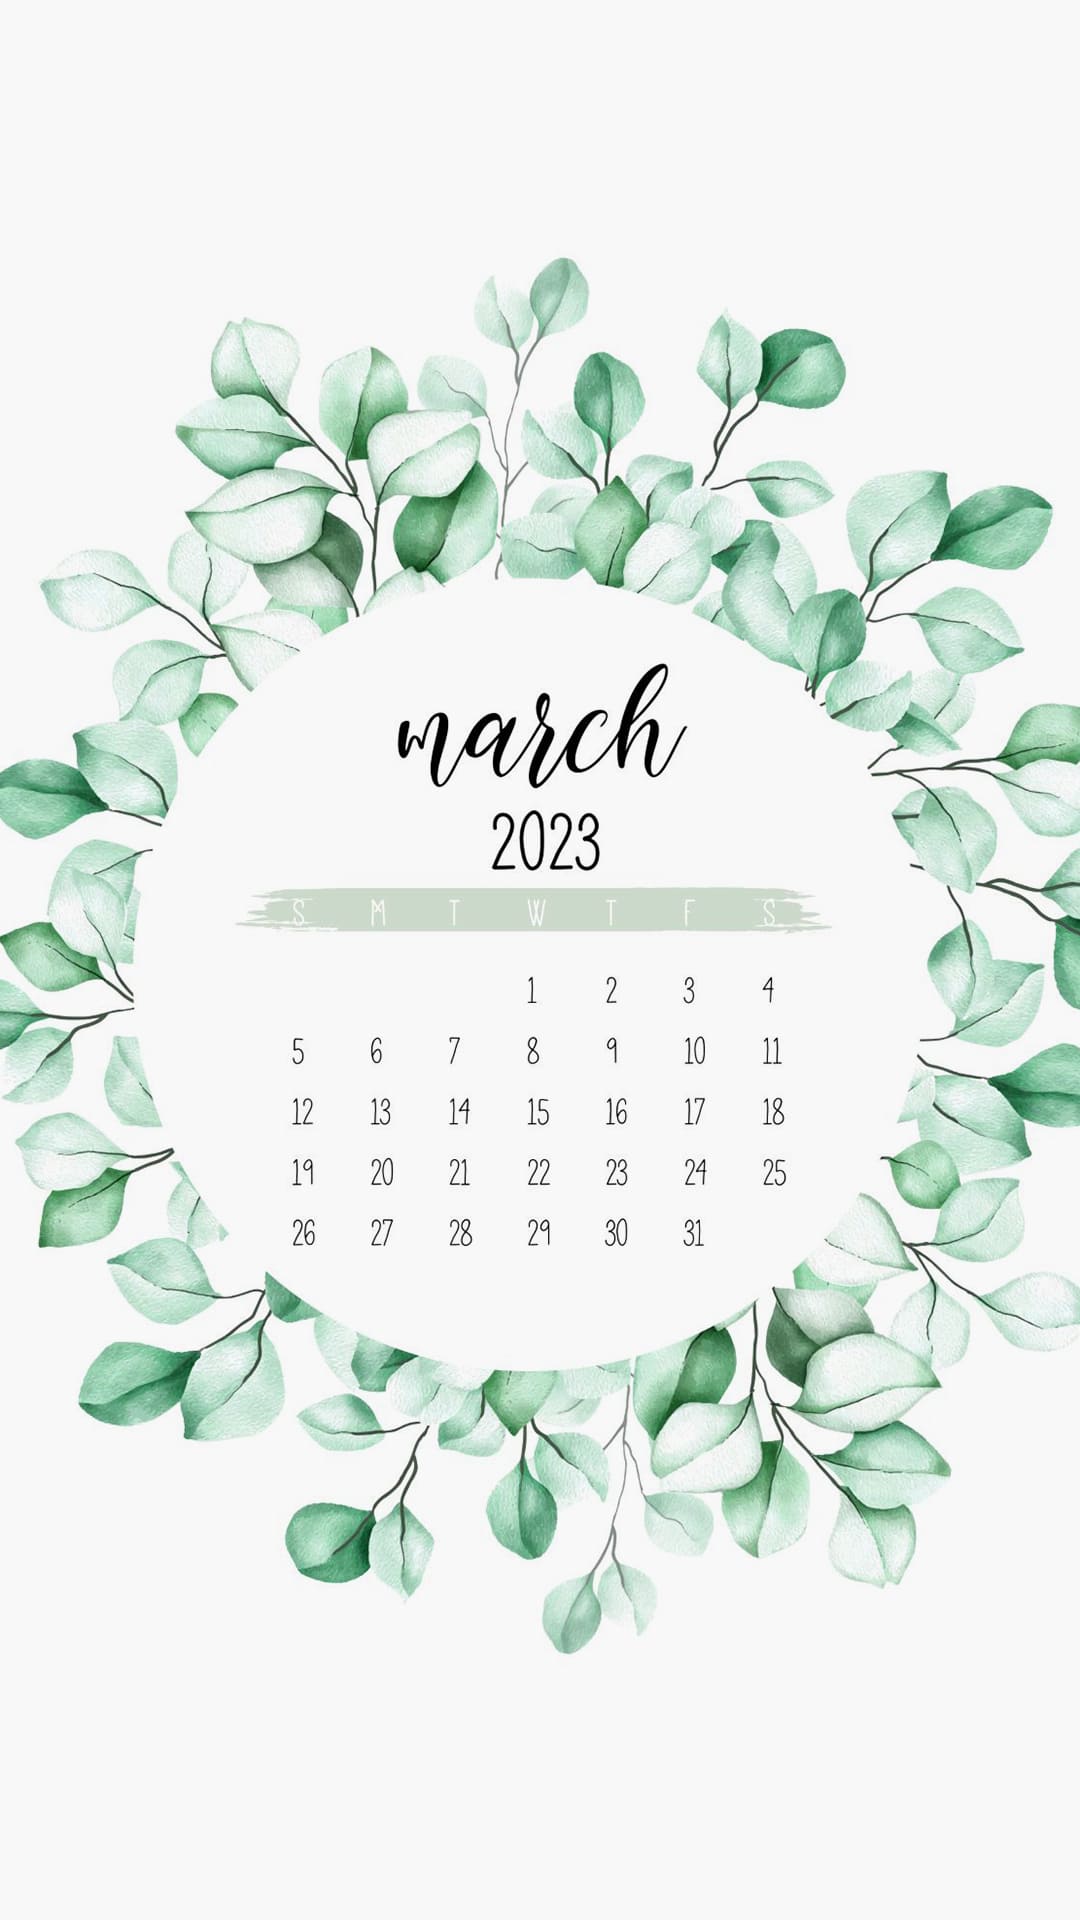 Free March 2023 Calendar Wallpapers  Desktop  Mobile